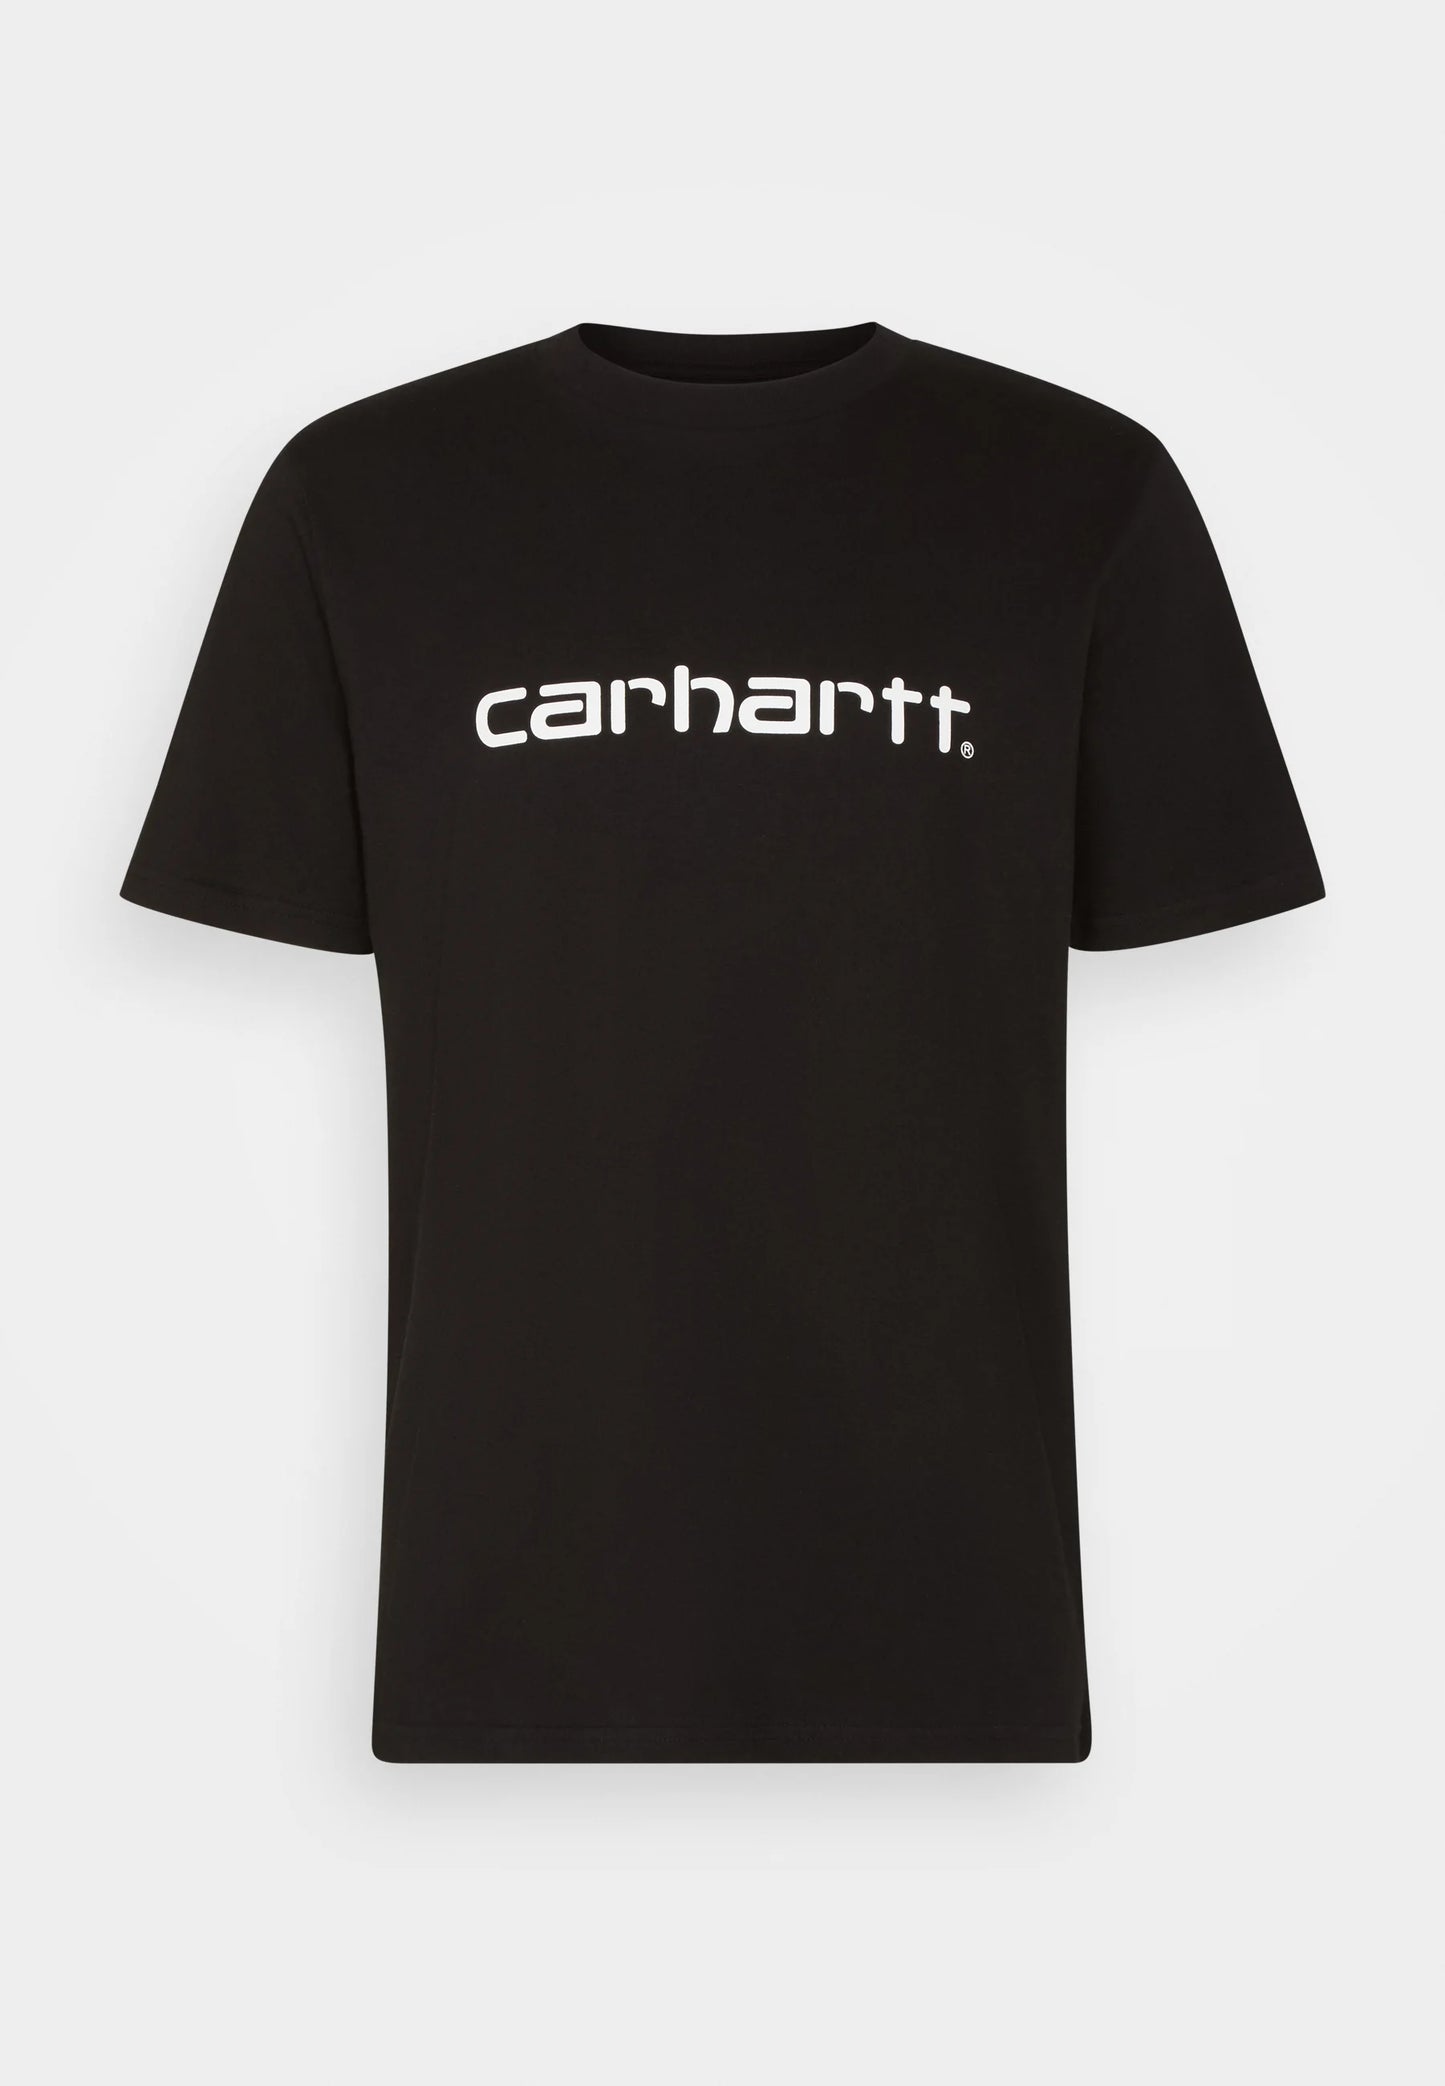 CARHARTT SCRIPT BLACK T-SHIRT